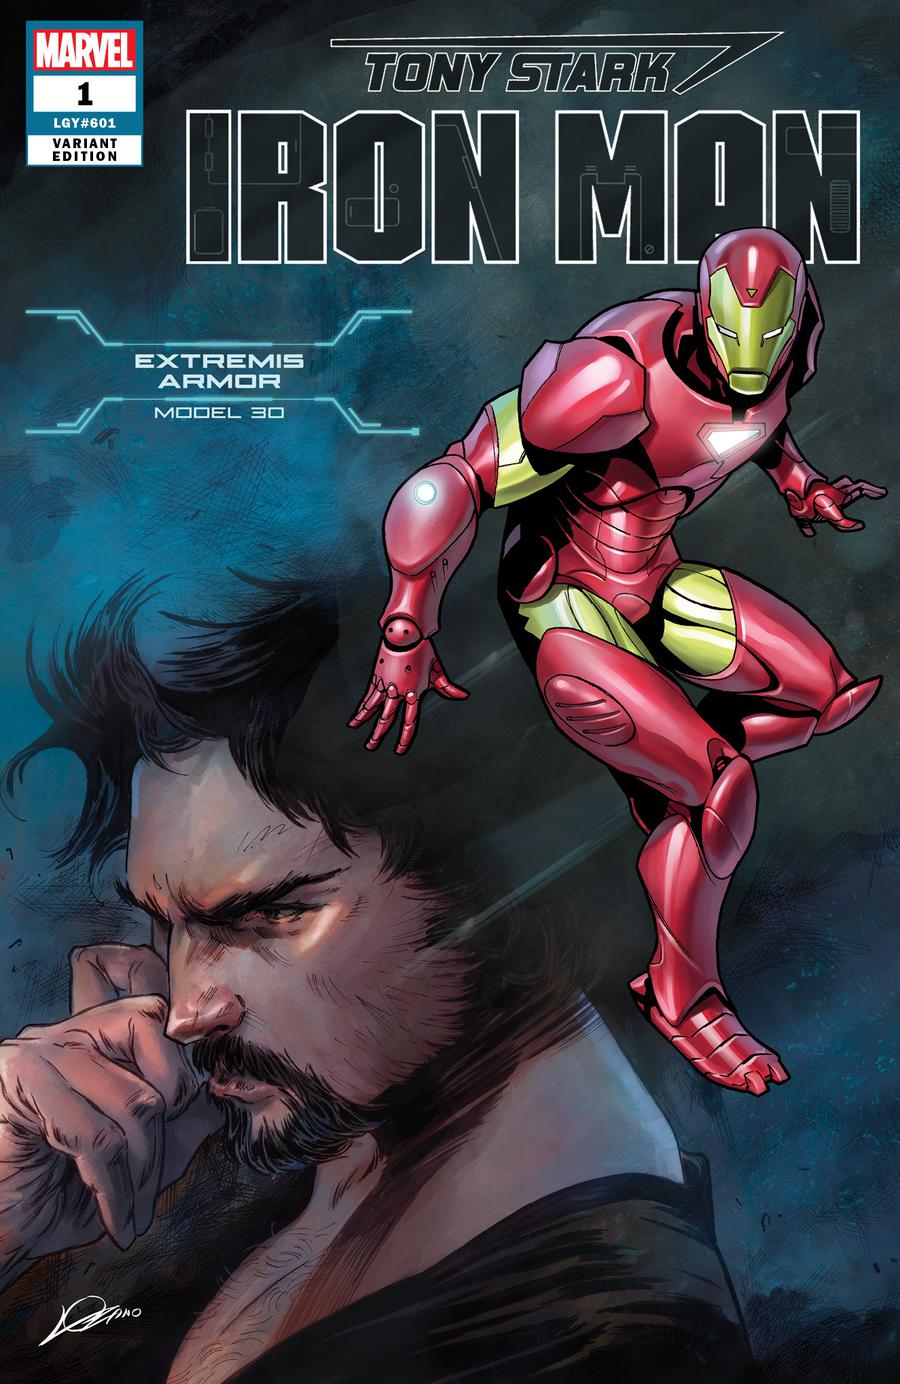 Tony Stark Iron Man #1 Cover C Variant Alexander Lozano & Valerio Schiti Model 30 Extremis Armor Cover